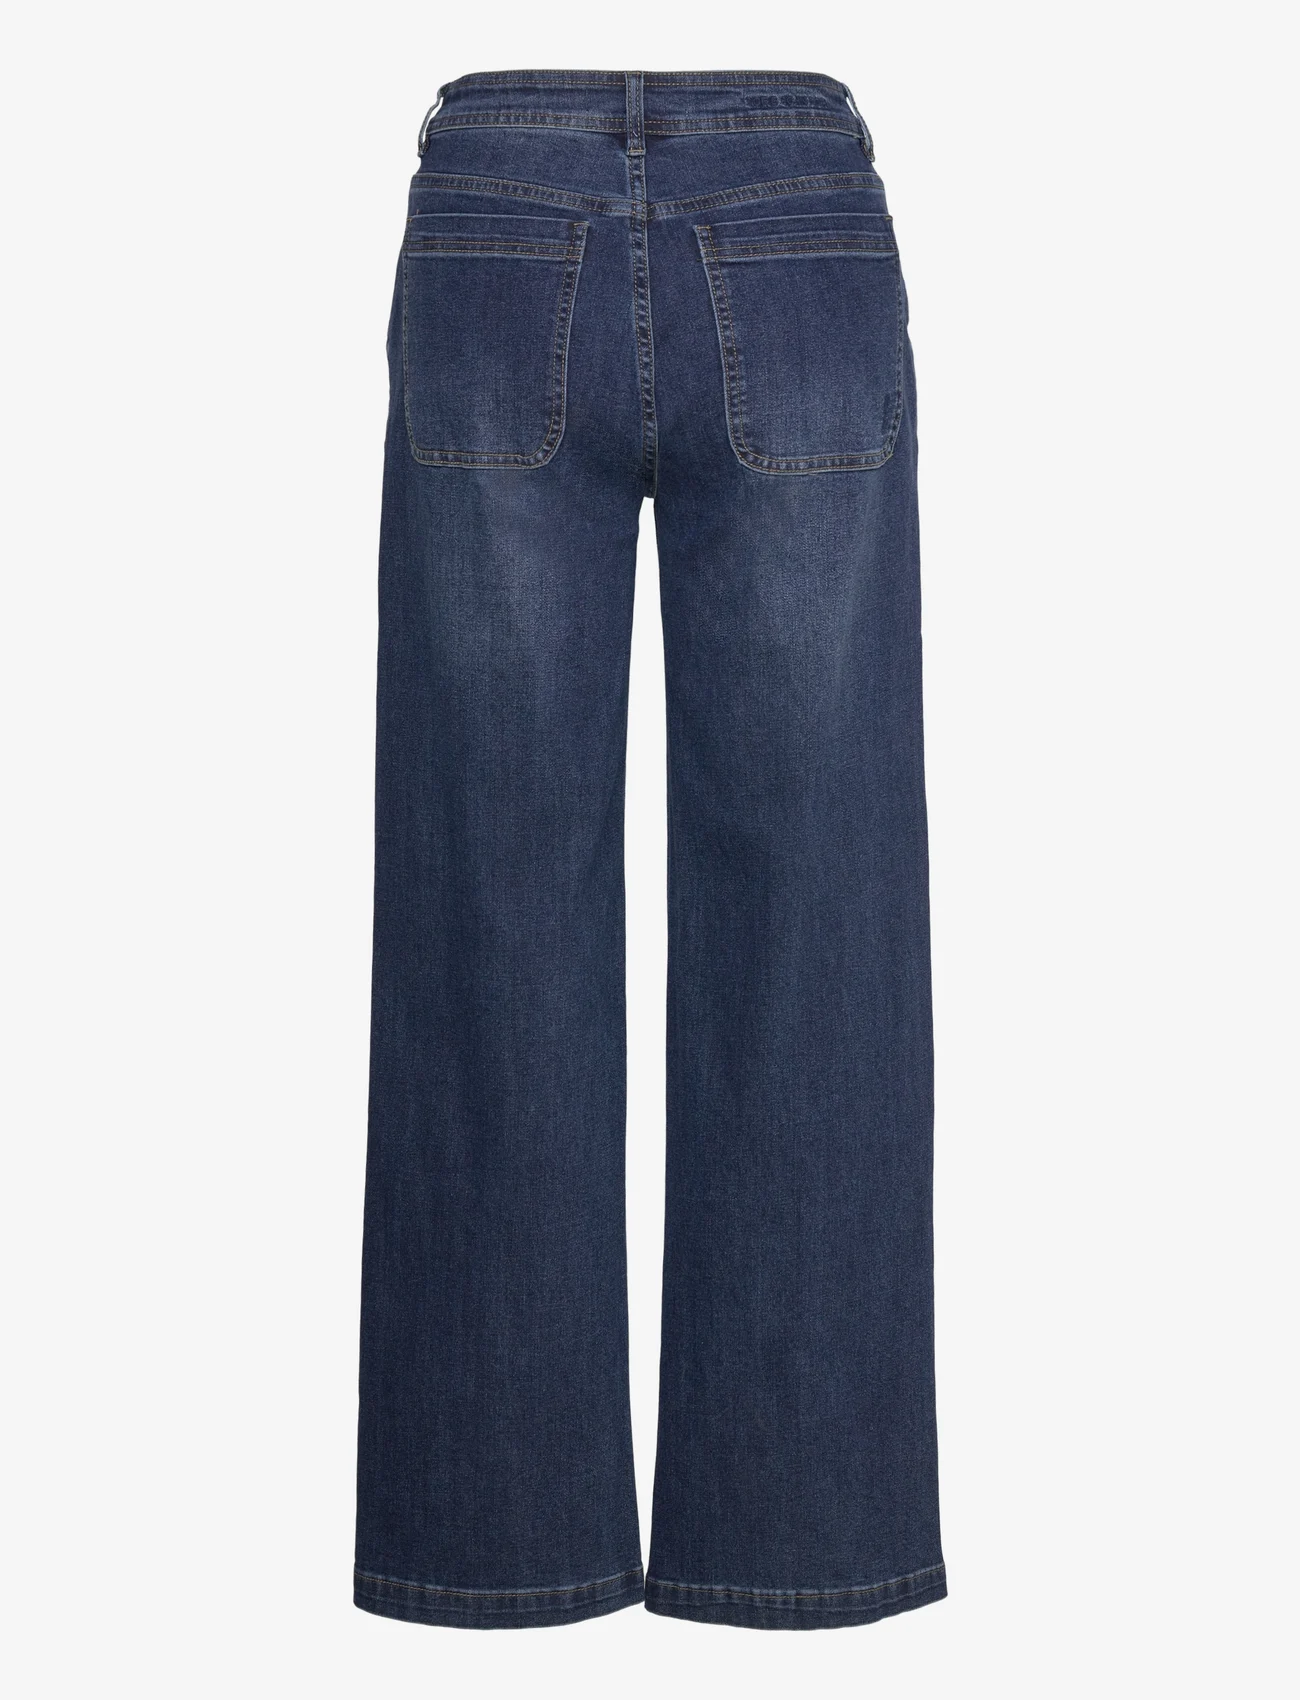 Sofie Schnoor - Jeans - pantalons larges - dark denim blue - 1